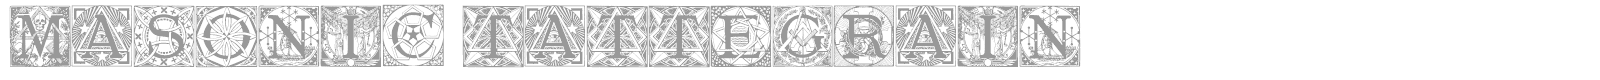 Font Masonic Tattegrain